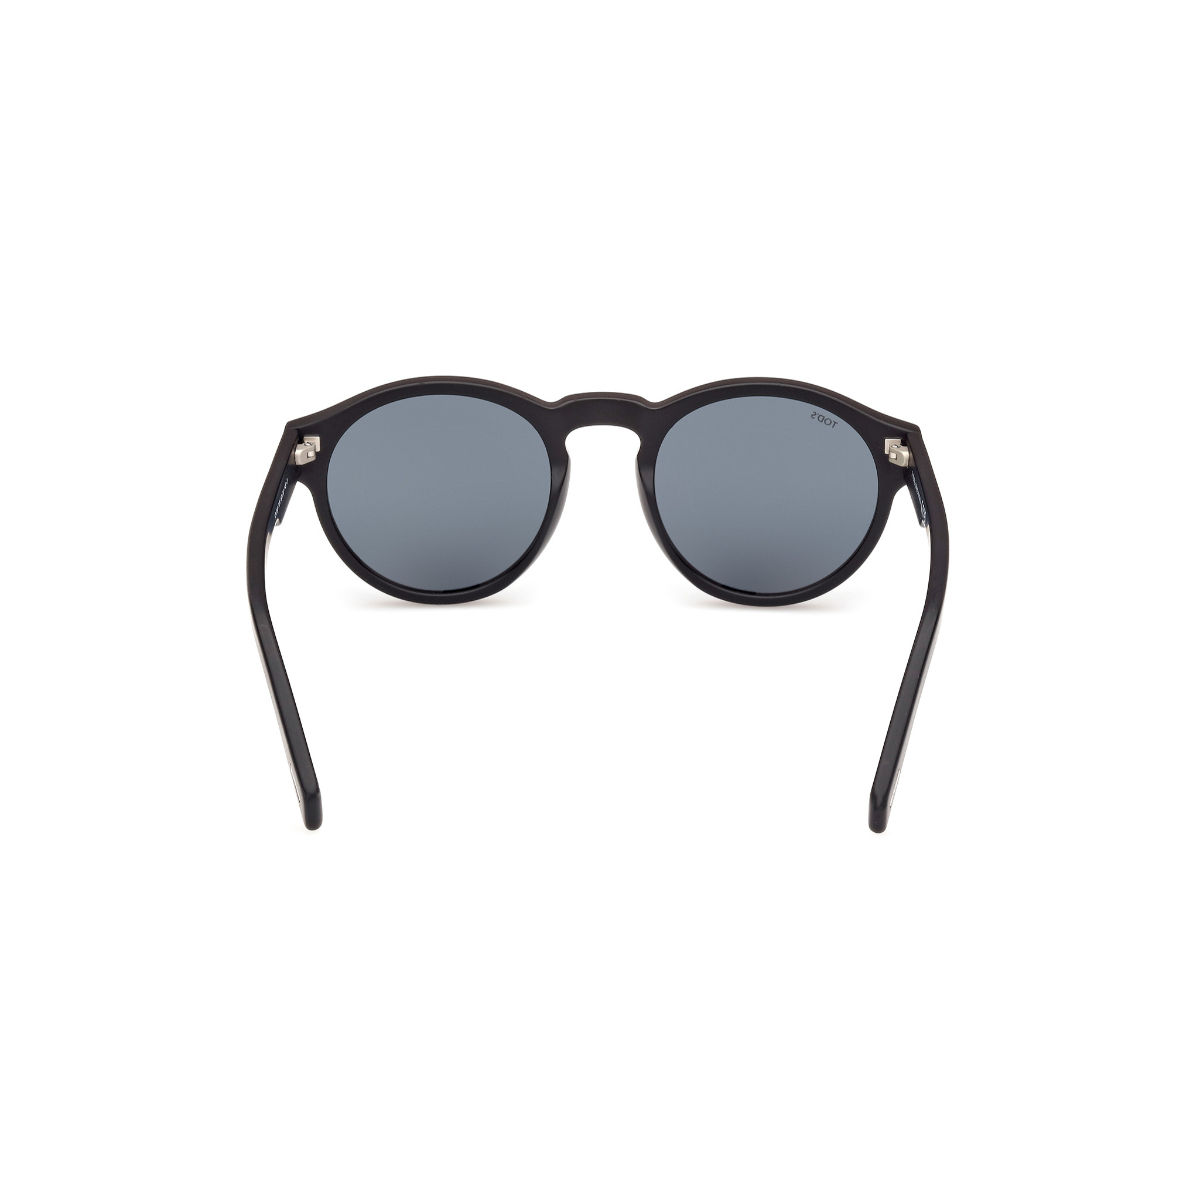 Buy TOD'S Black Acetate Sunglasses (52) Online